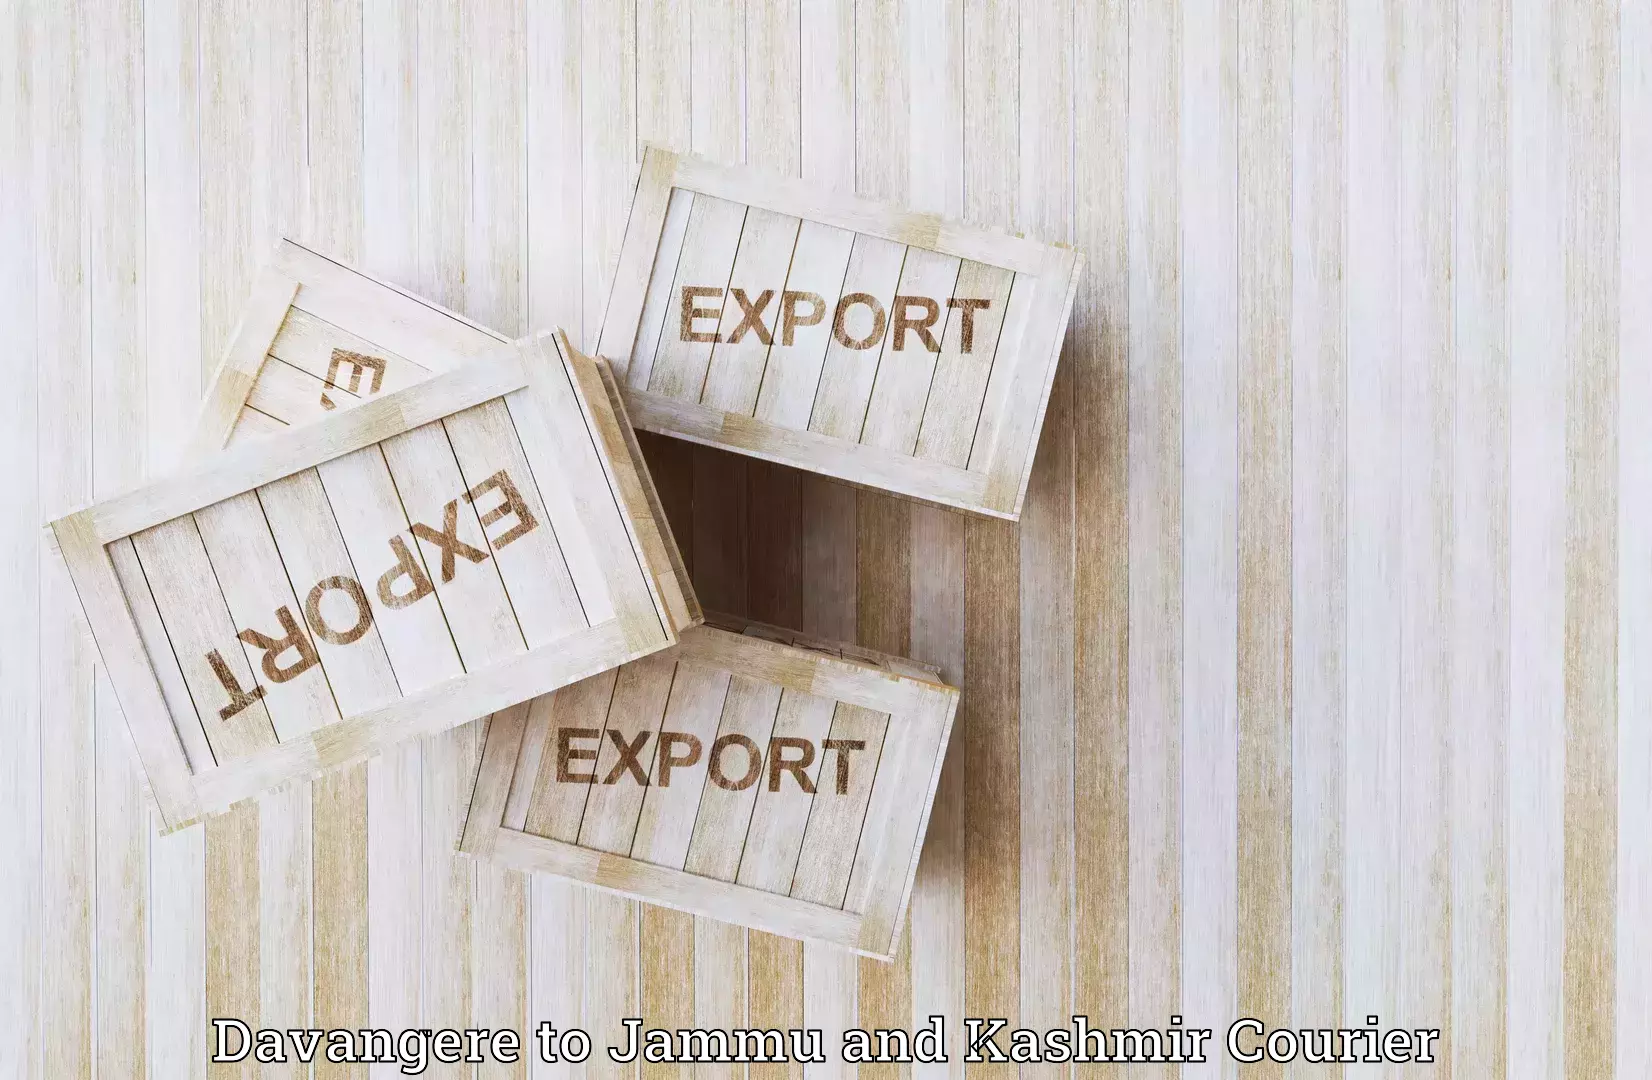 Courier service comparison Davangere to Jammu